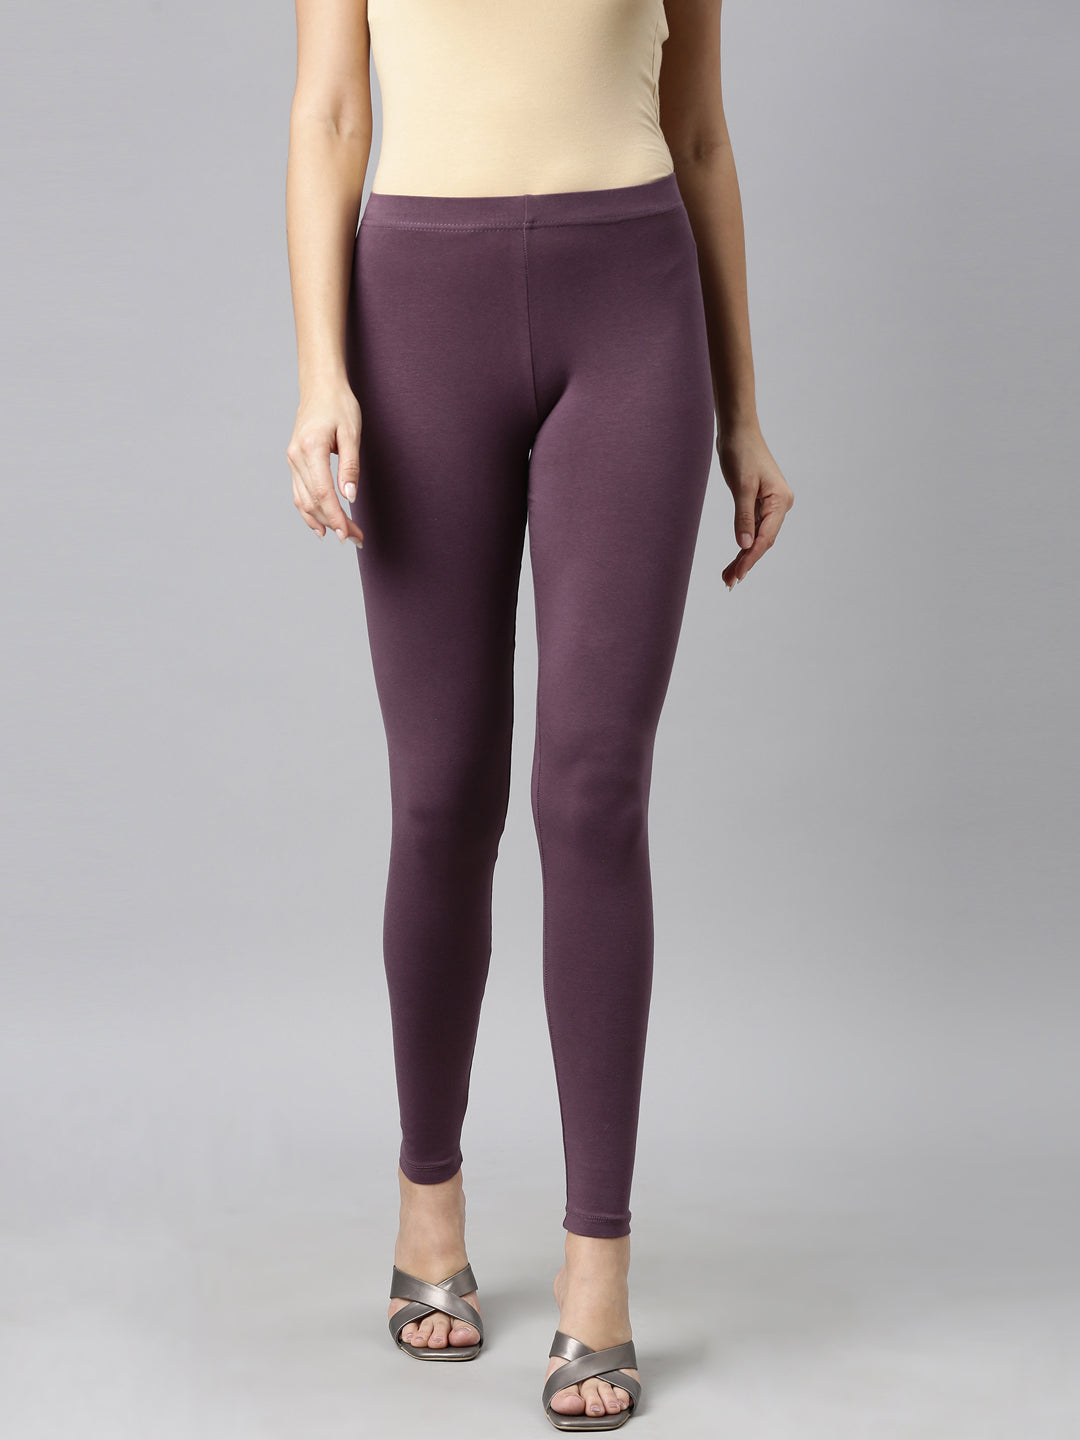 STX High Waisted Yoga Pants for Women | StrengthXpress